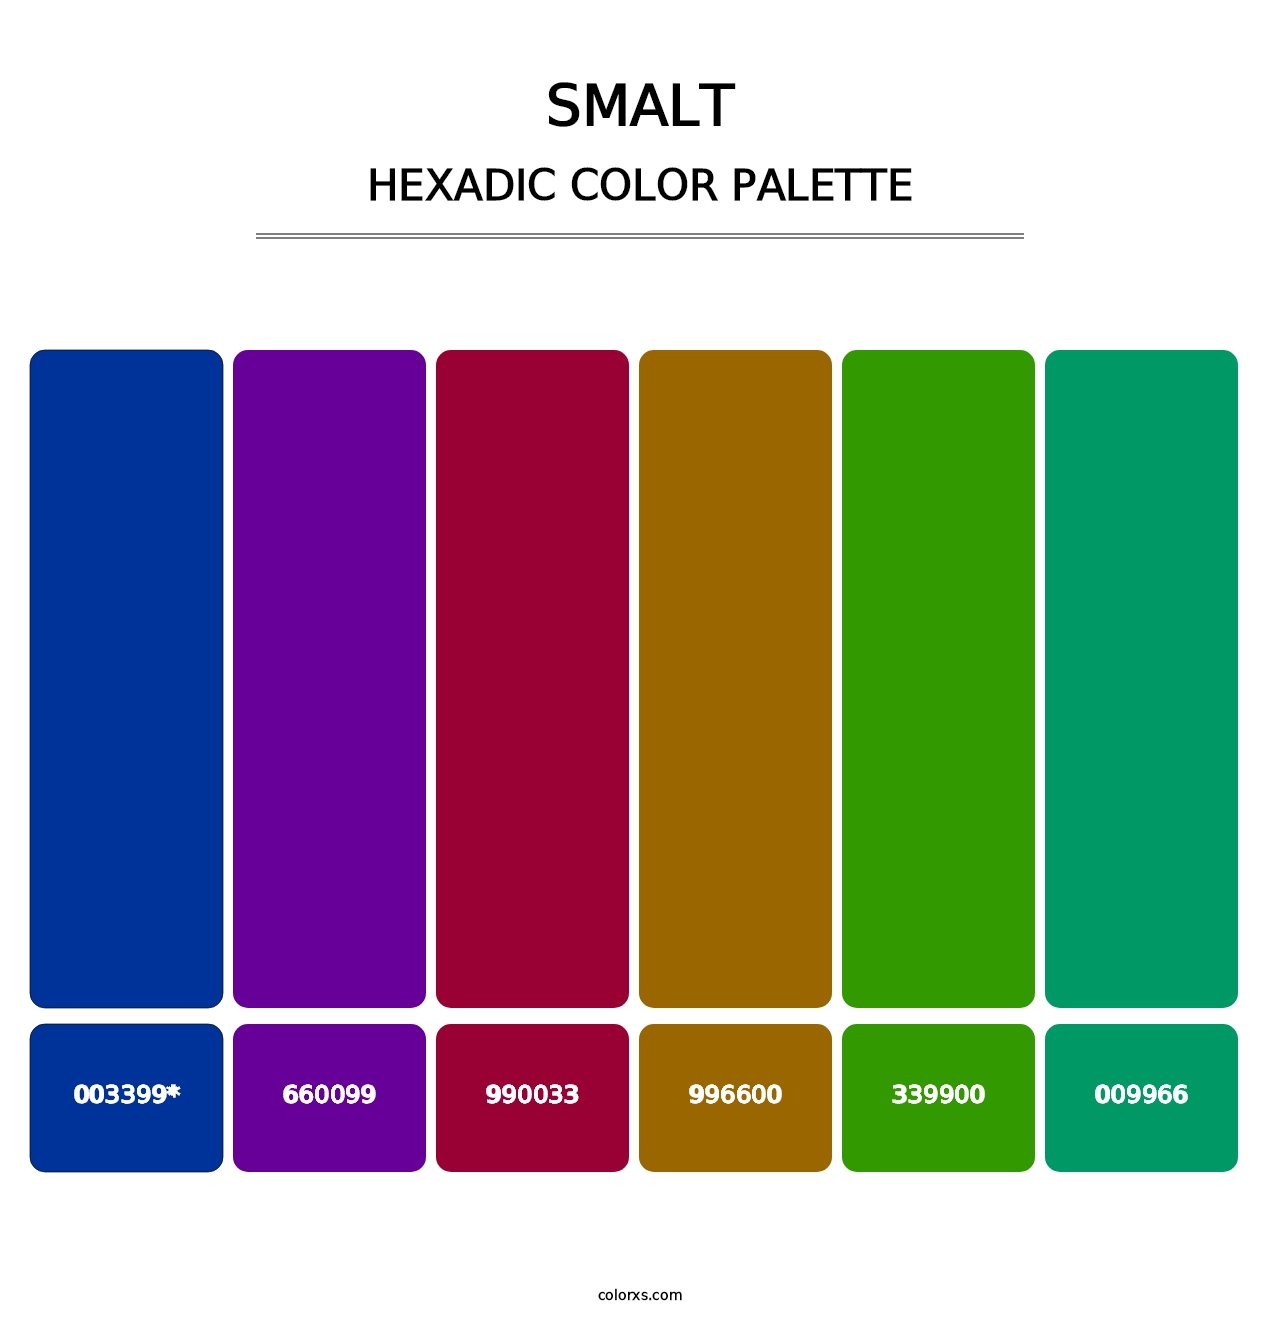 Smalt - Hexadic Color Palette